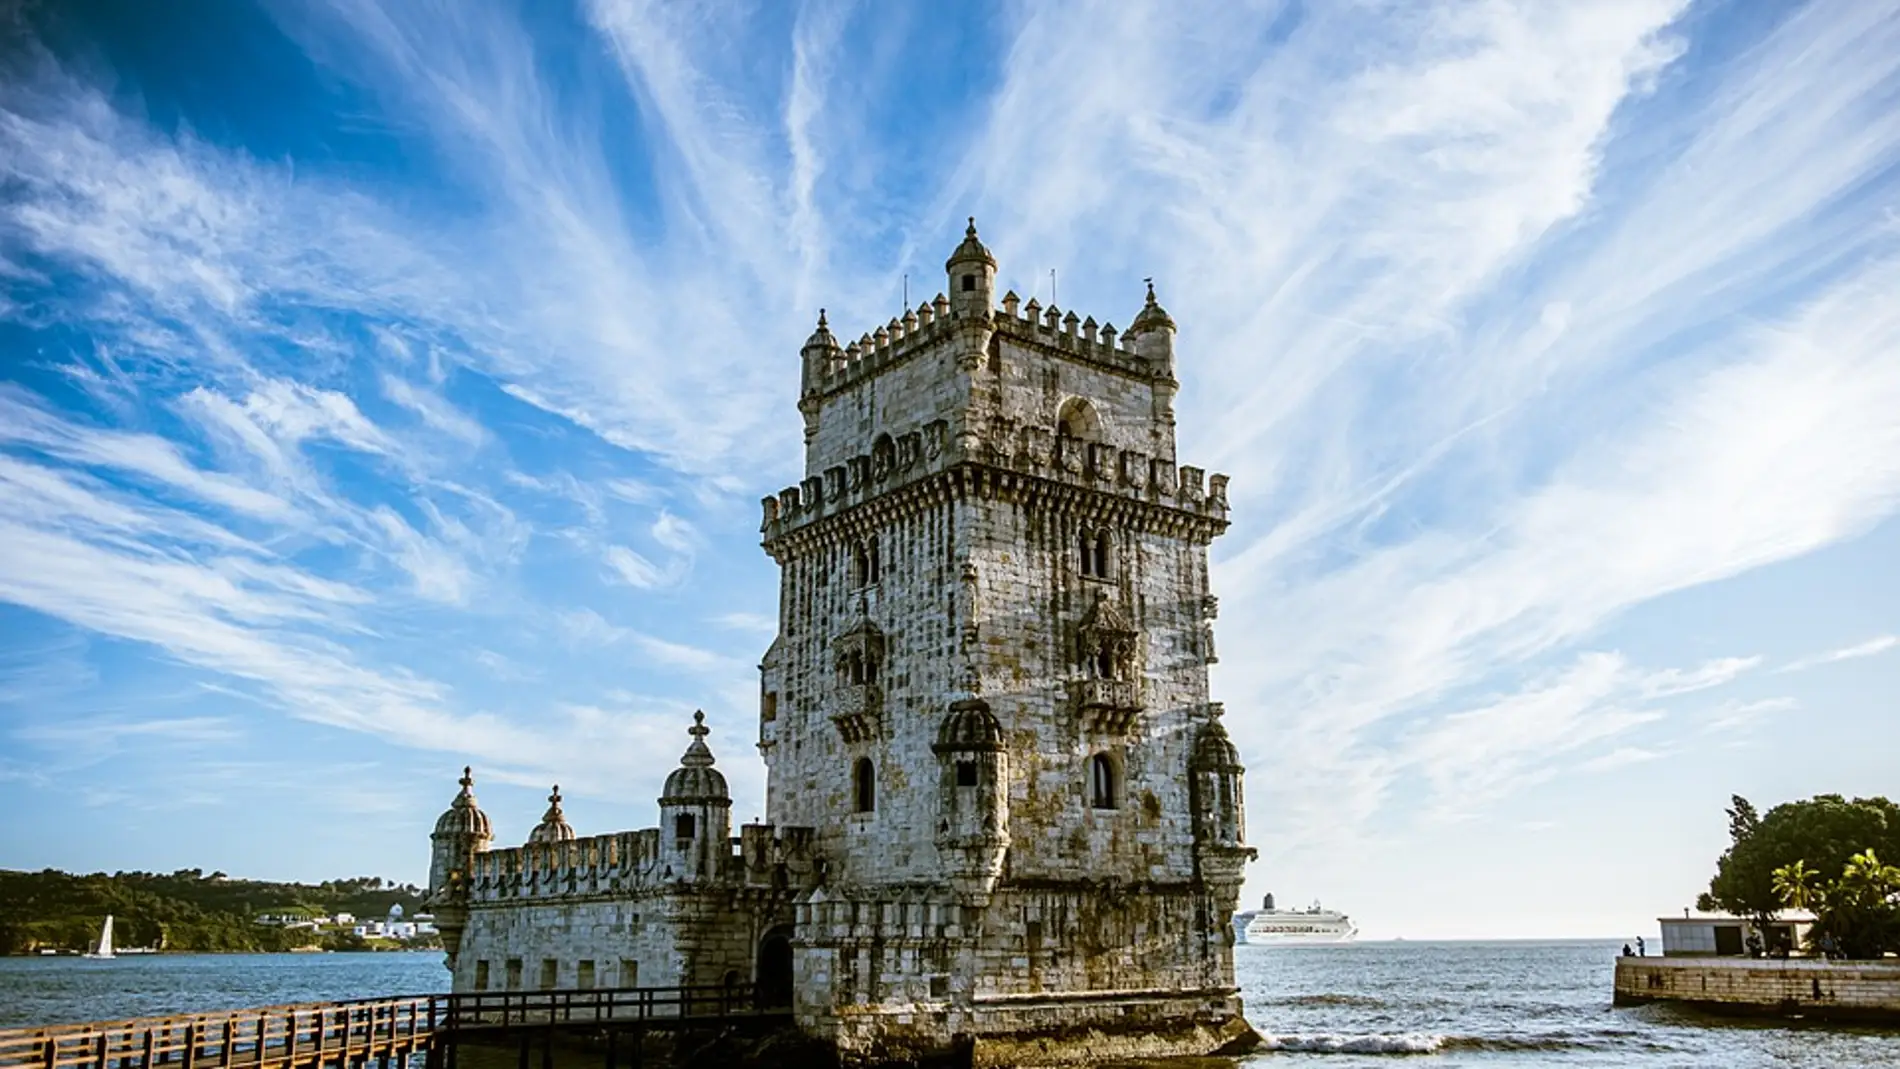  Todo lo que debes saber de la famosa Torre de Belém de Lisboa